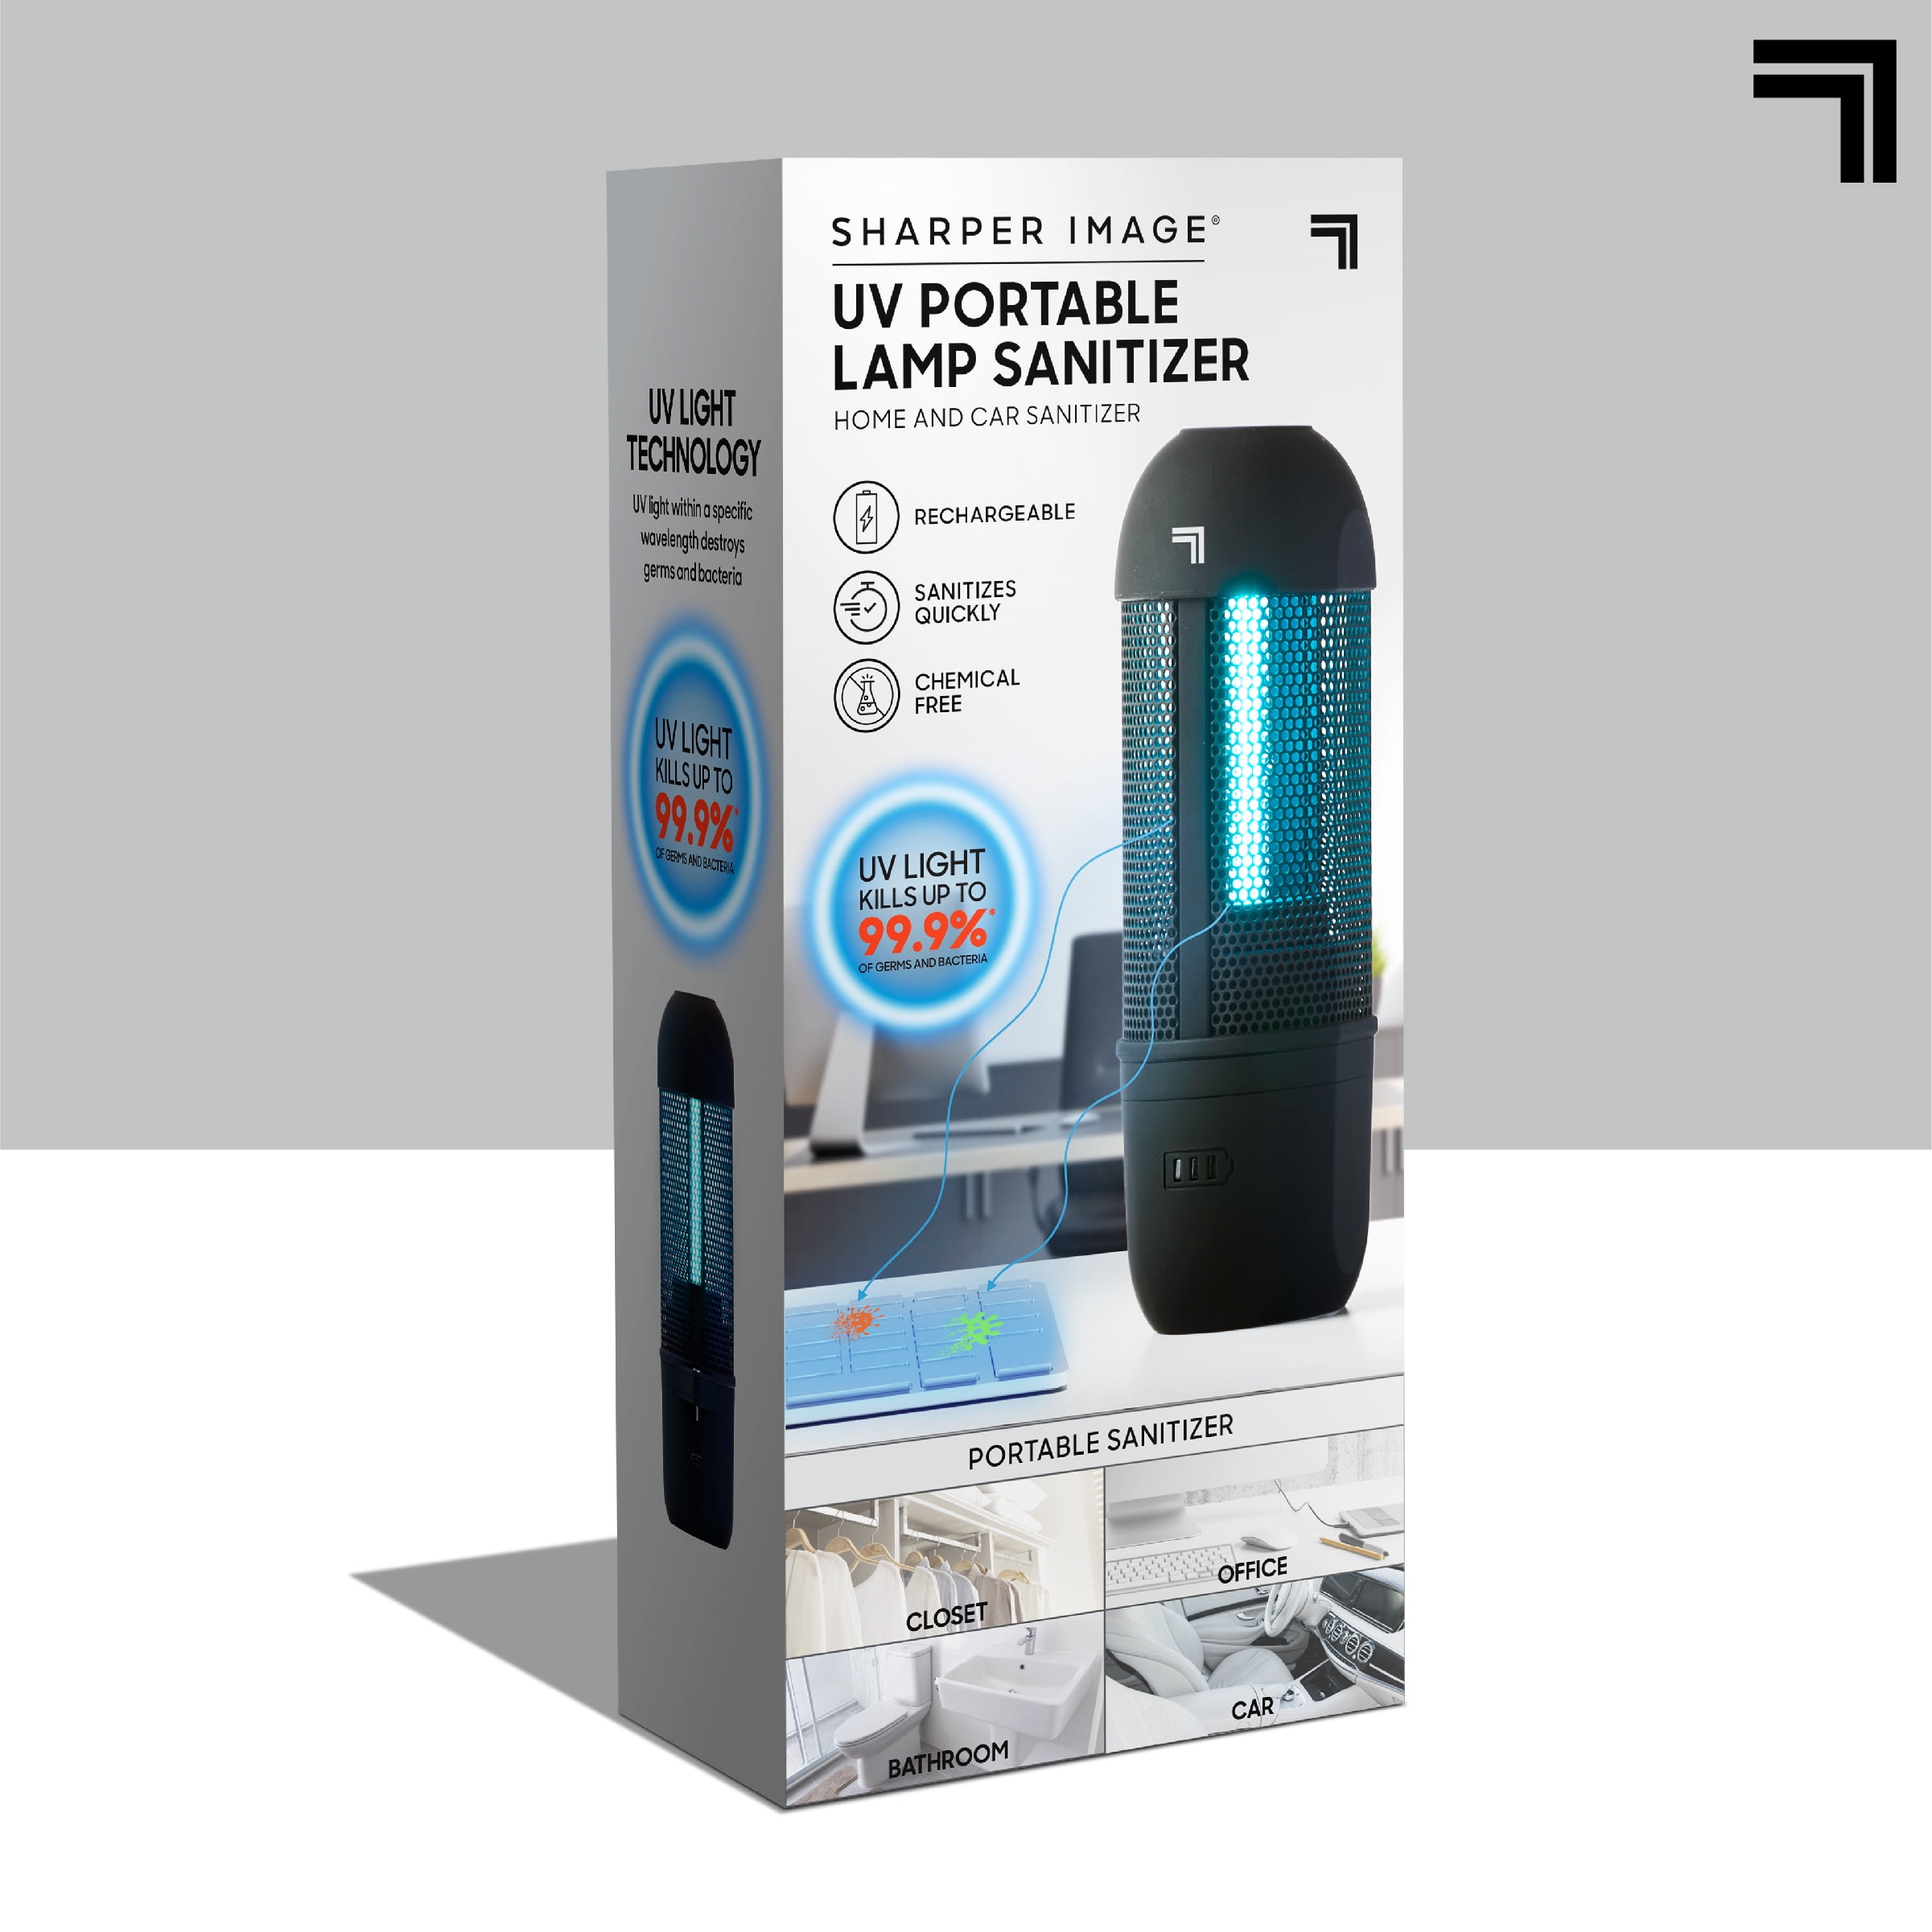 Sharper Image Rechargeable LED Lantern, Adult Unisex